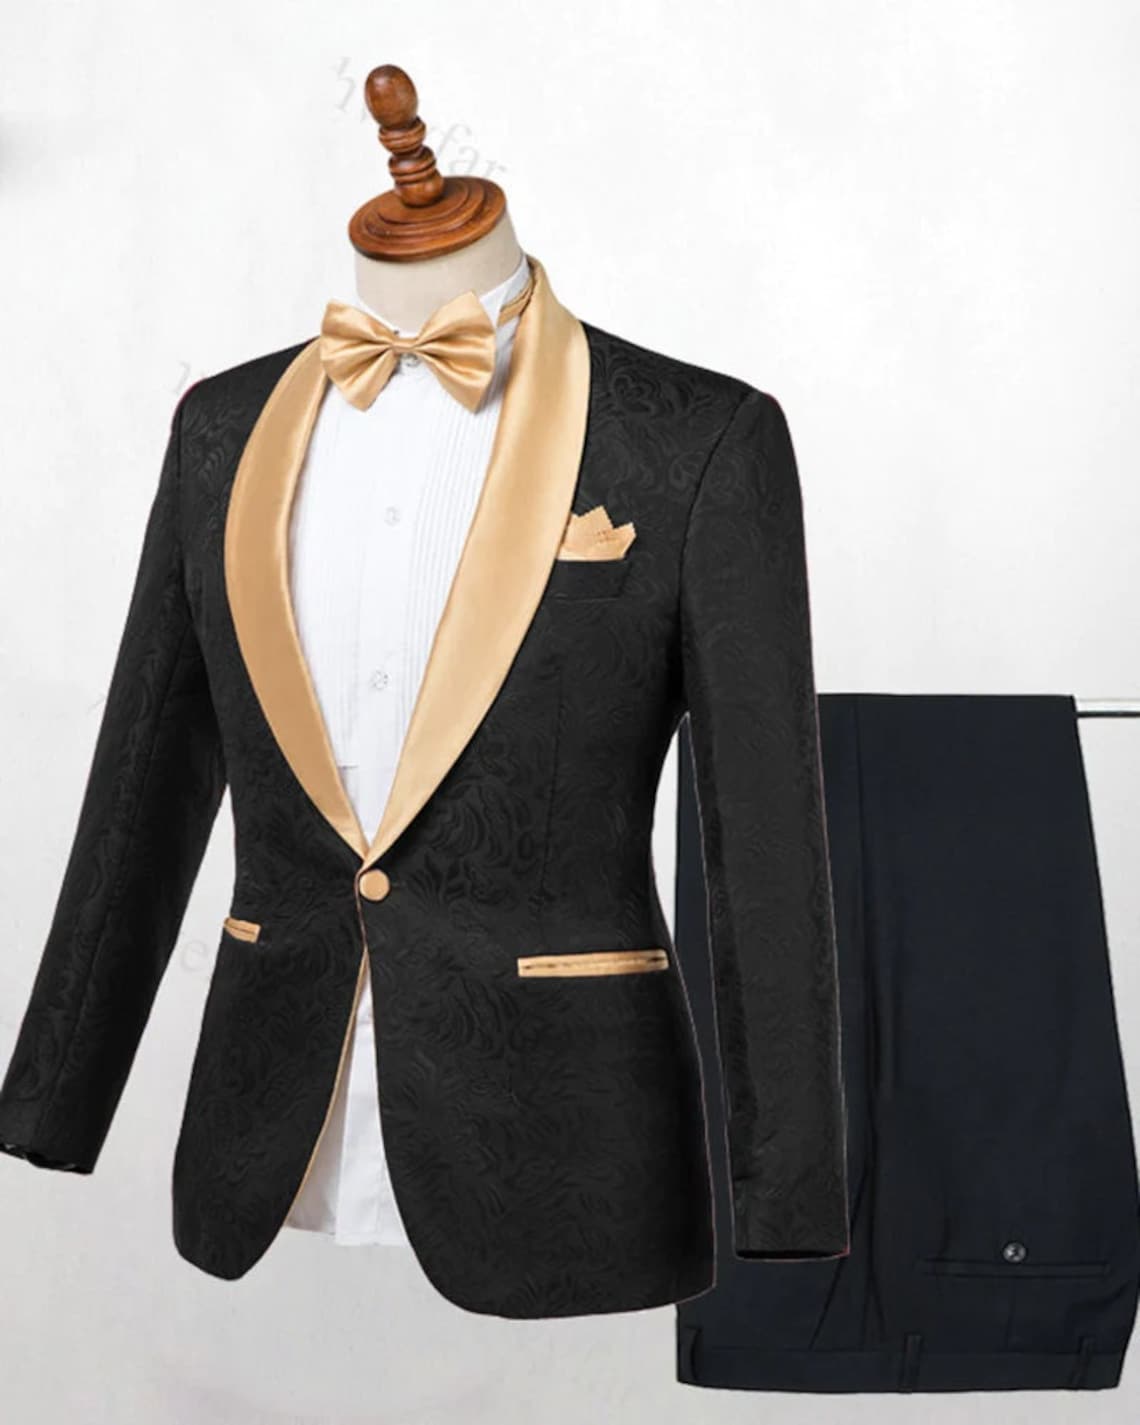 Designer Tuxedo Men Suits 3 Piece Black Floral And Gold Style image 1